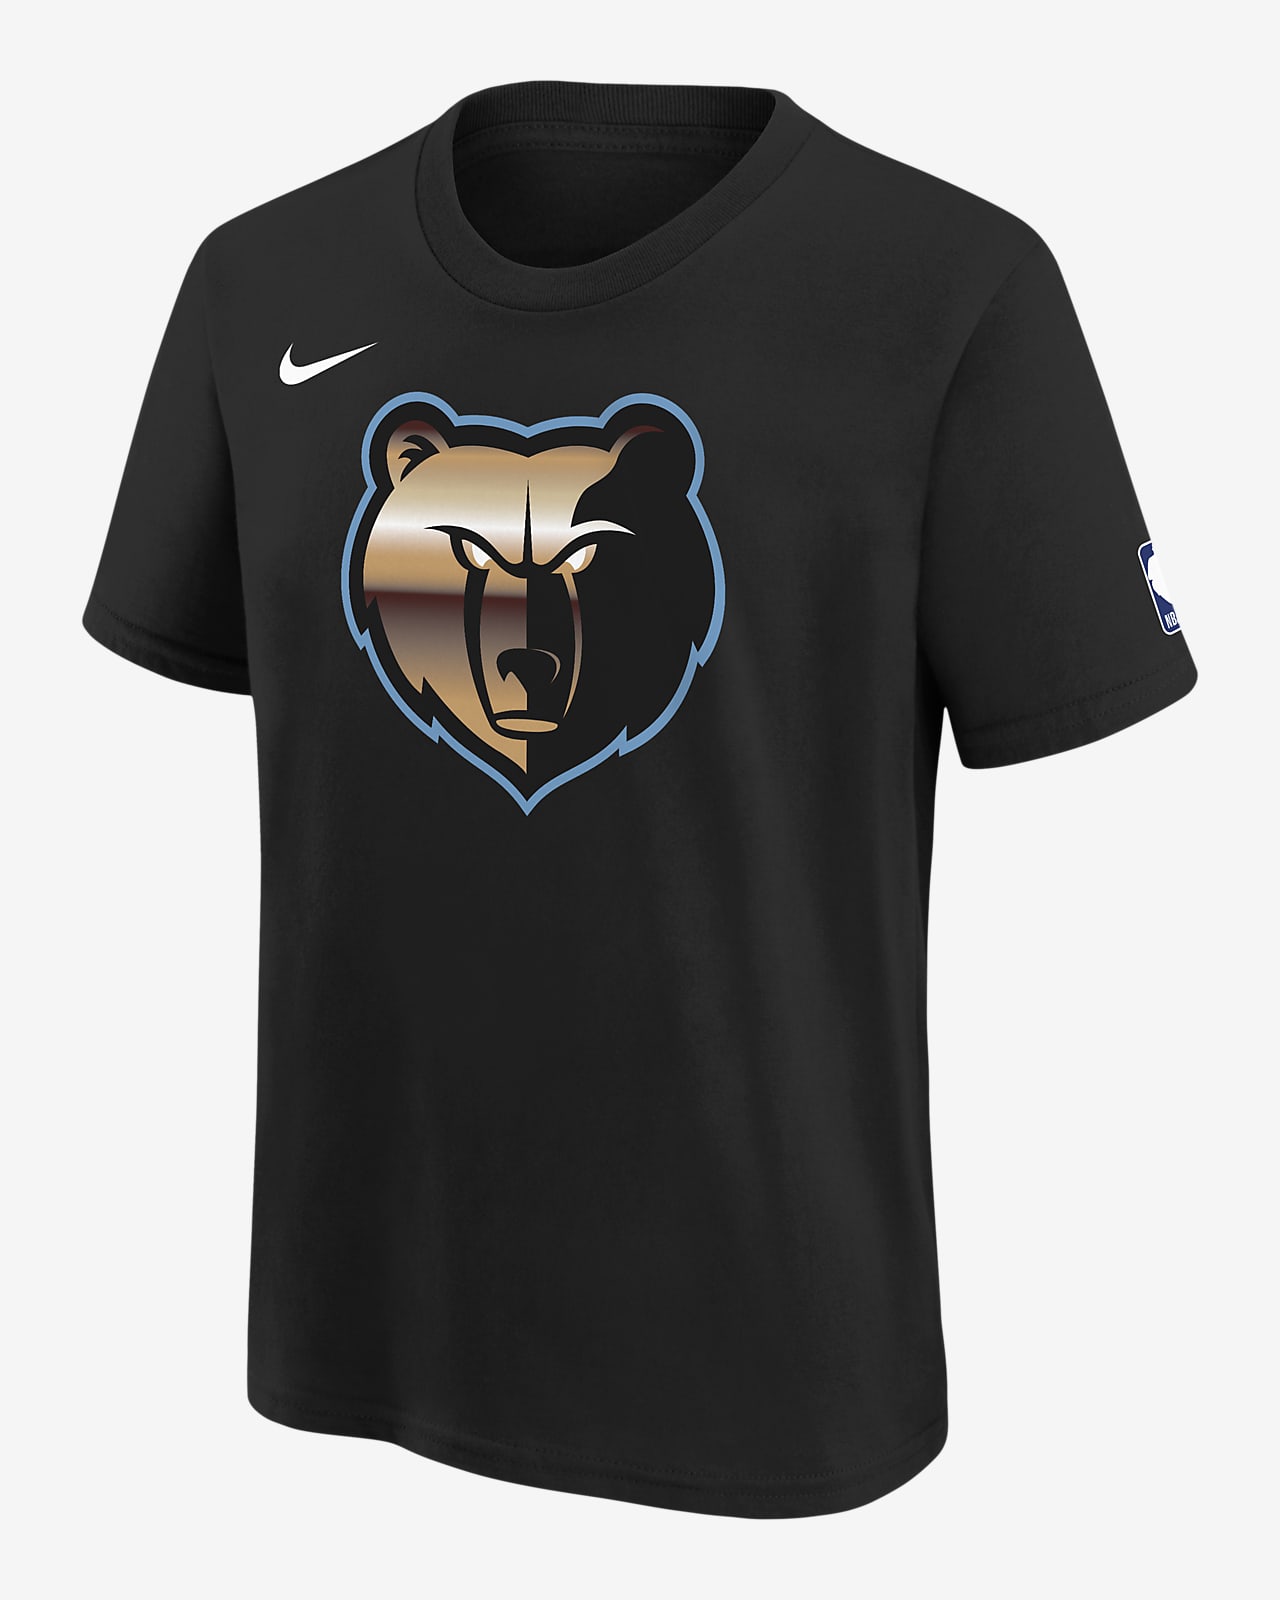 memphis grizzlies city jersey 2021 shorts